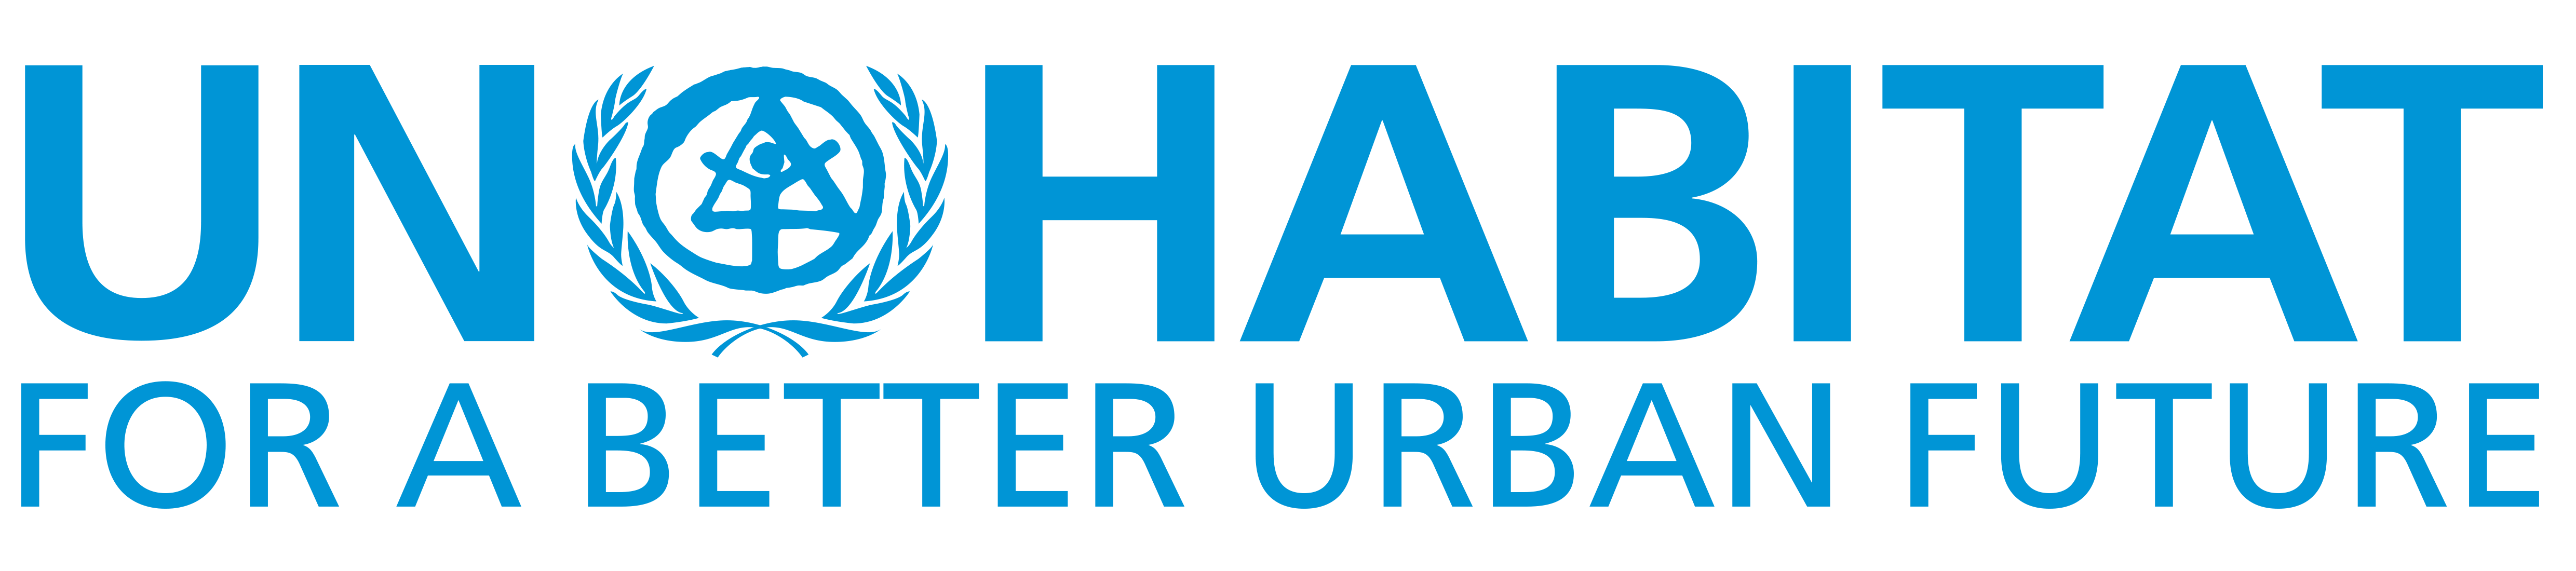 blue letters on a white background for UN HABITAT